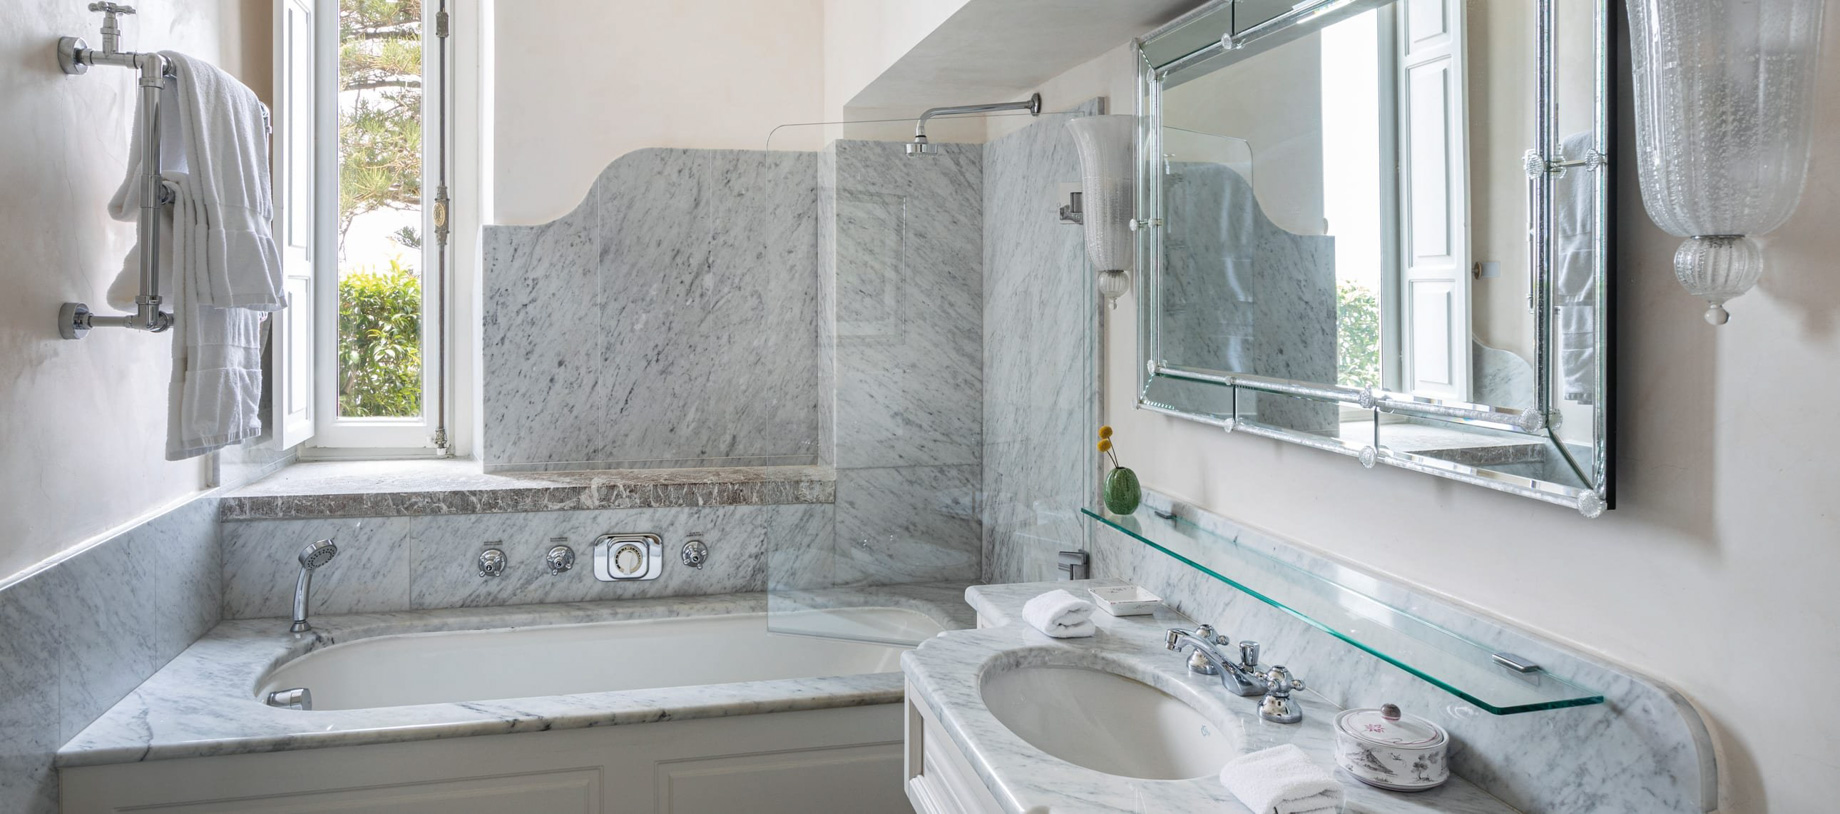 110 – Grand Hotel Timeo, A Belmond Hotel – Taormina, Italy – Bathroom